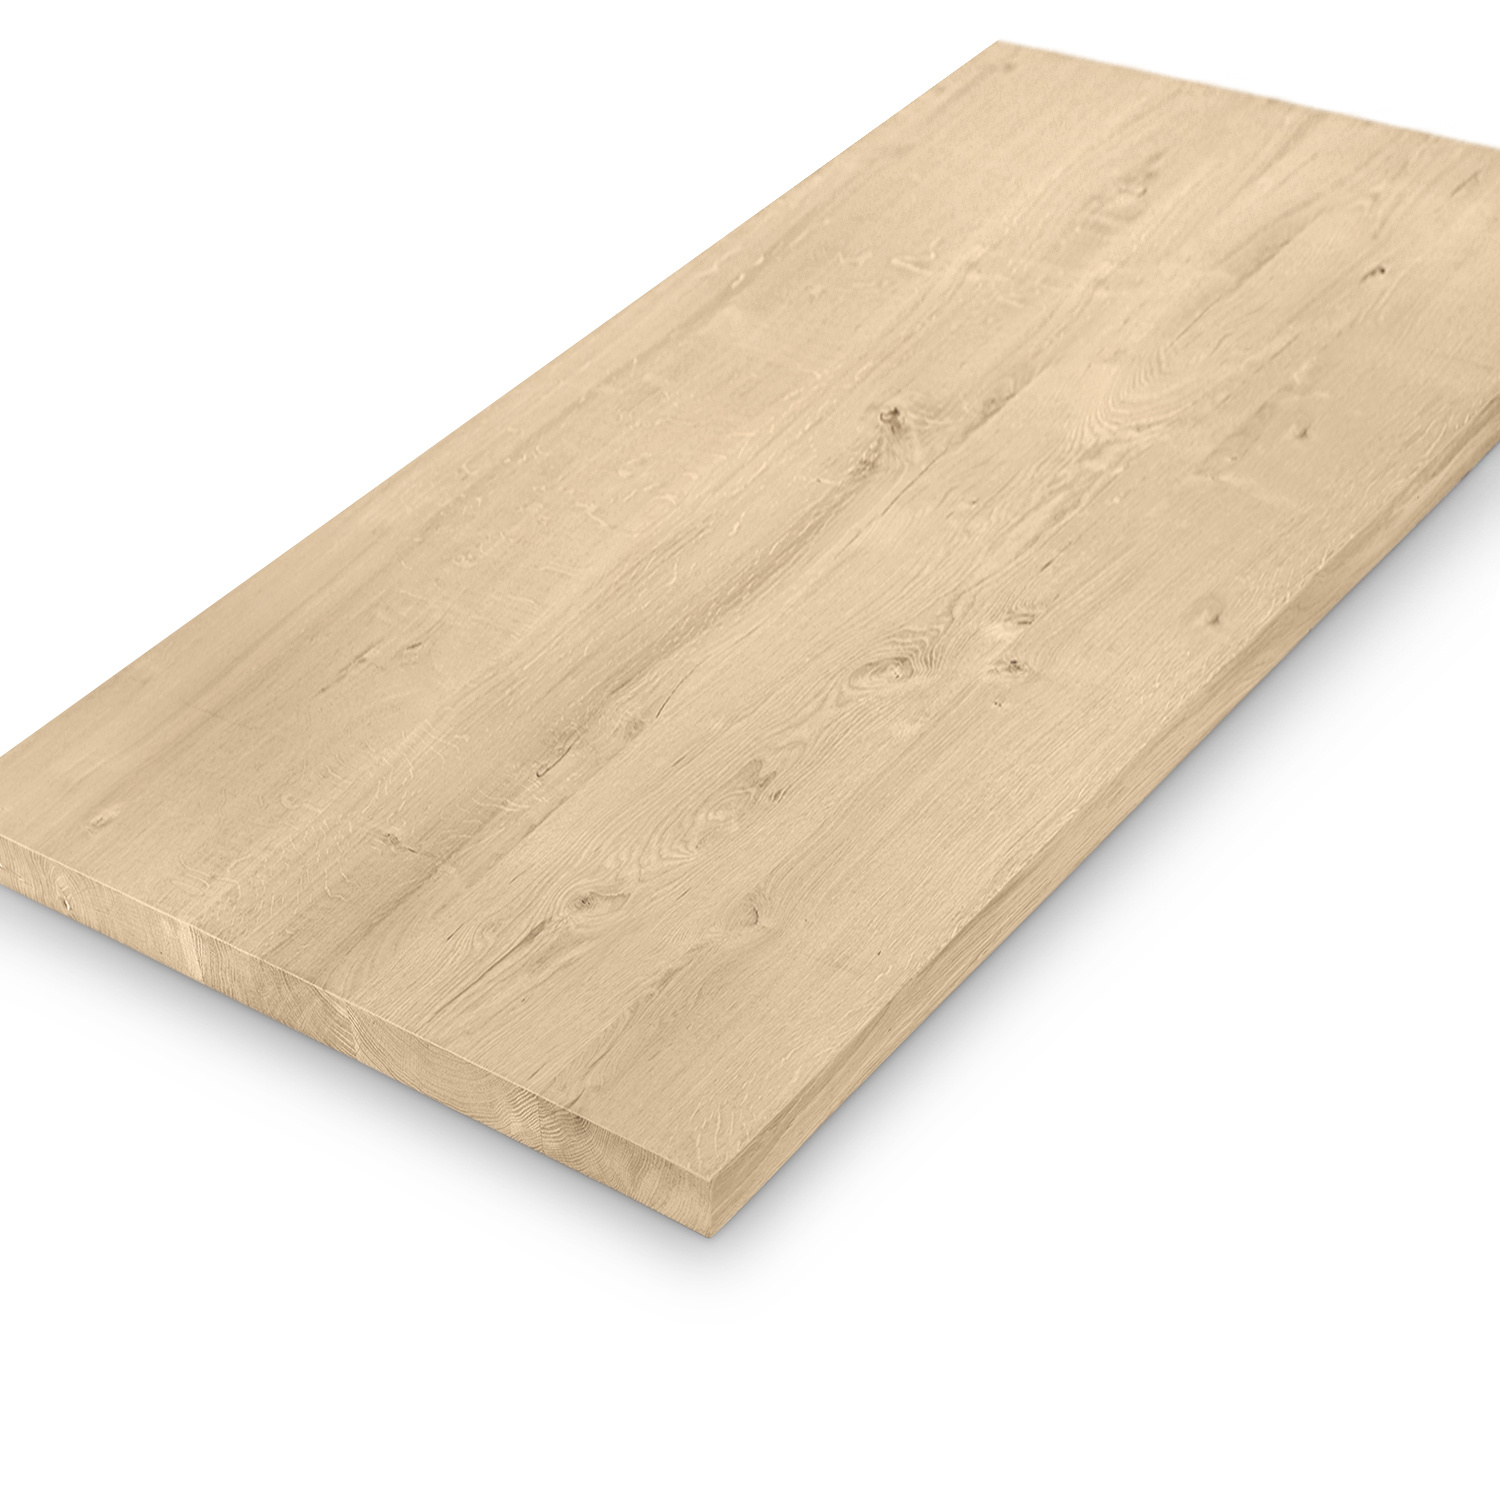  Eiken tafelblad - 4 cm dik (massief) - diverse afmetingen - extra rustiek Europees eikenhout - verlijmd kd 10-12%